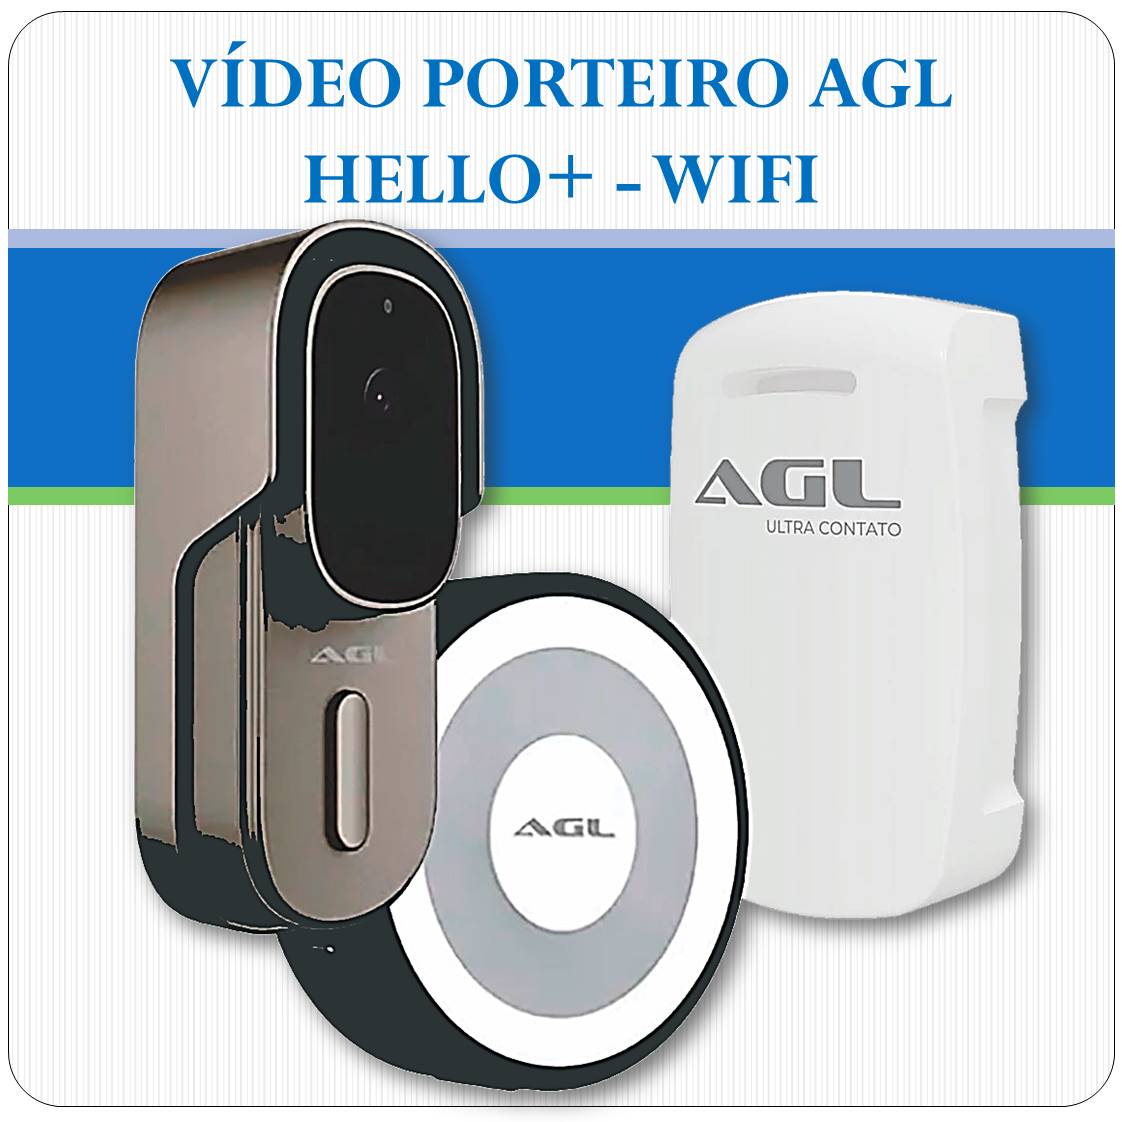 Video Porteiro AGL Hello+ WIFI